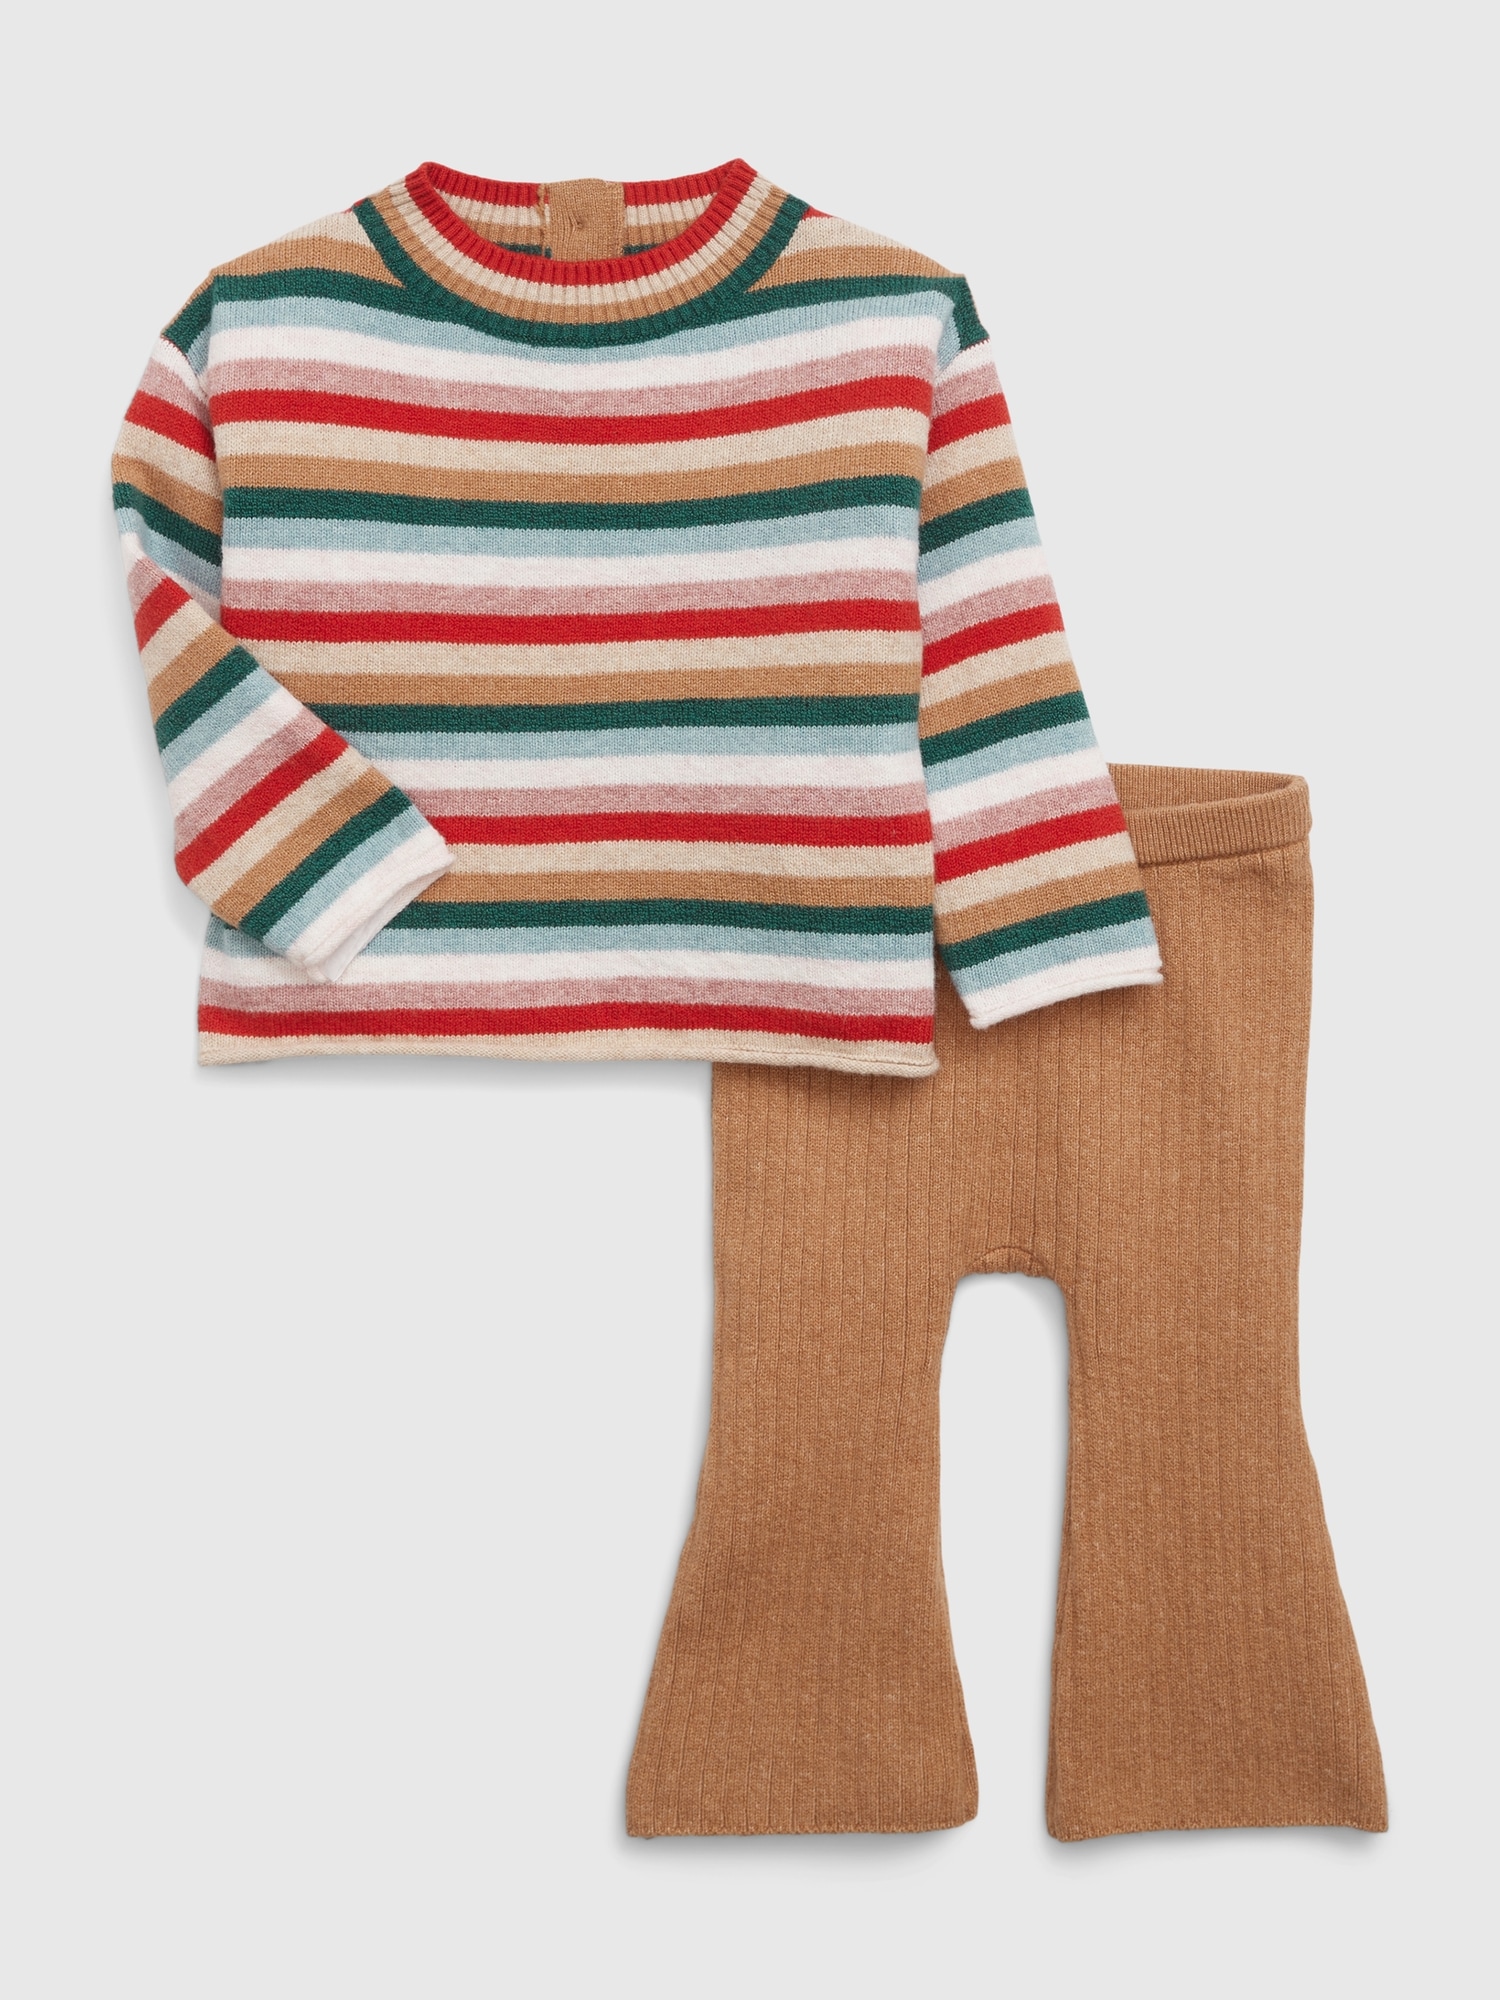 Baby CashSoft Sweater Outfit Set